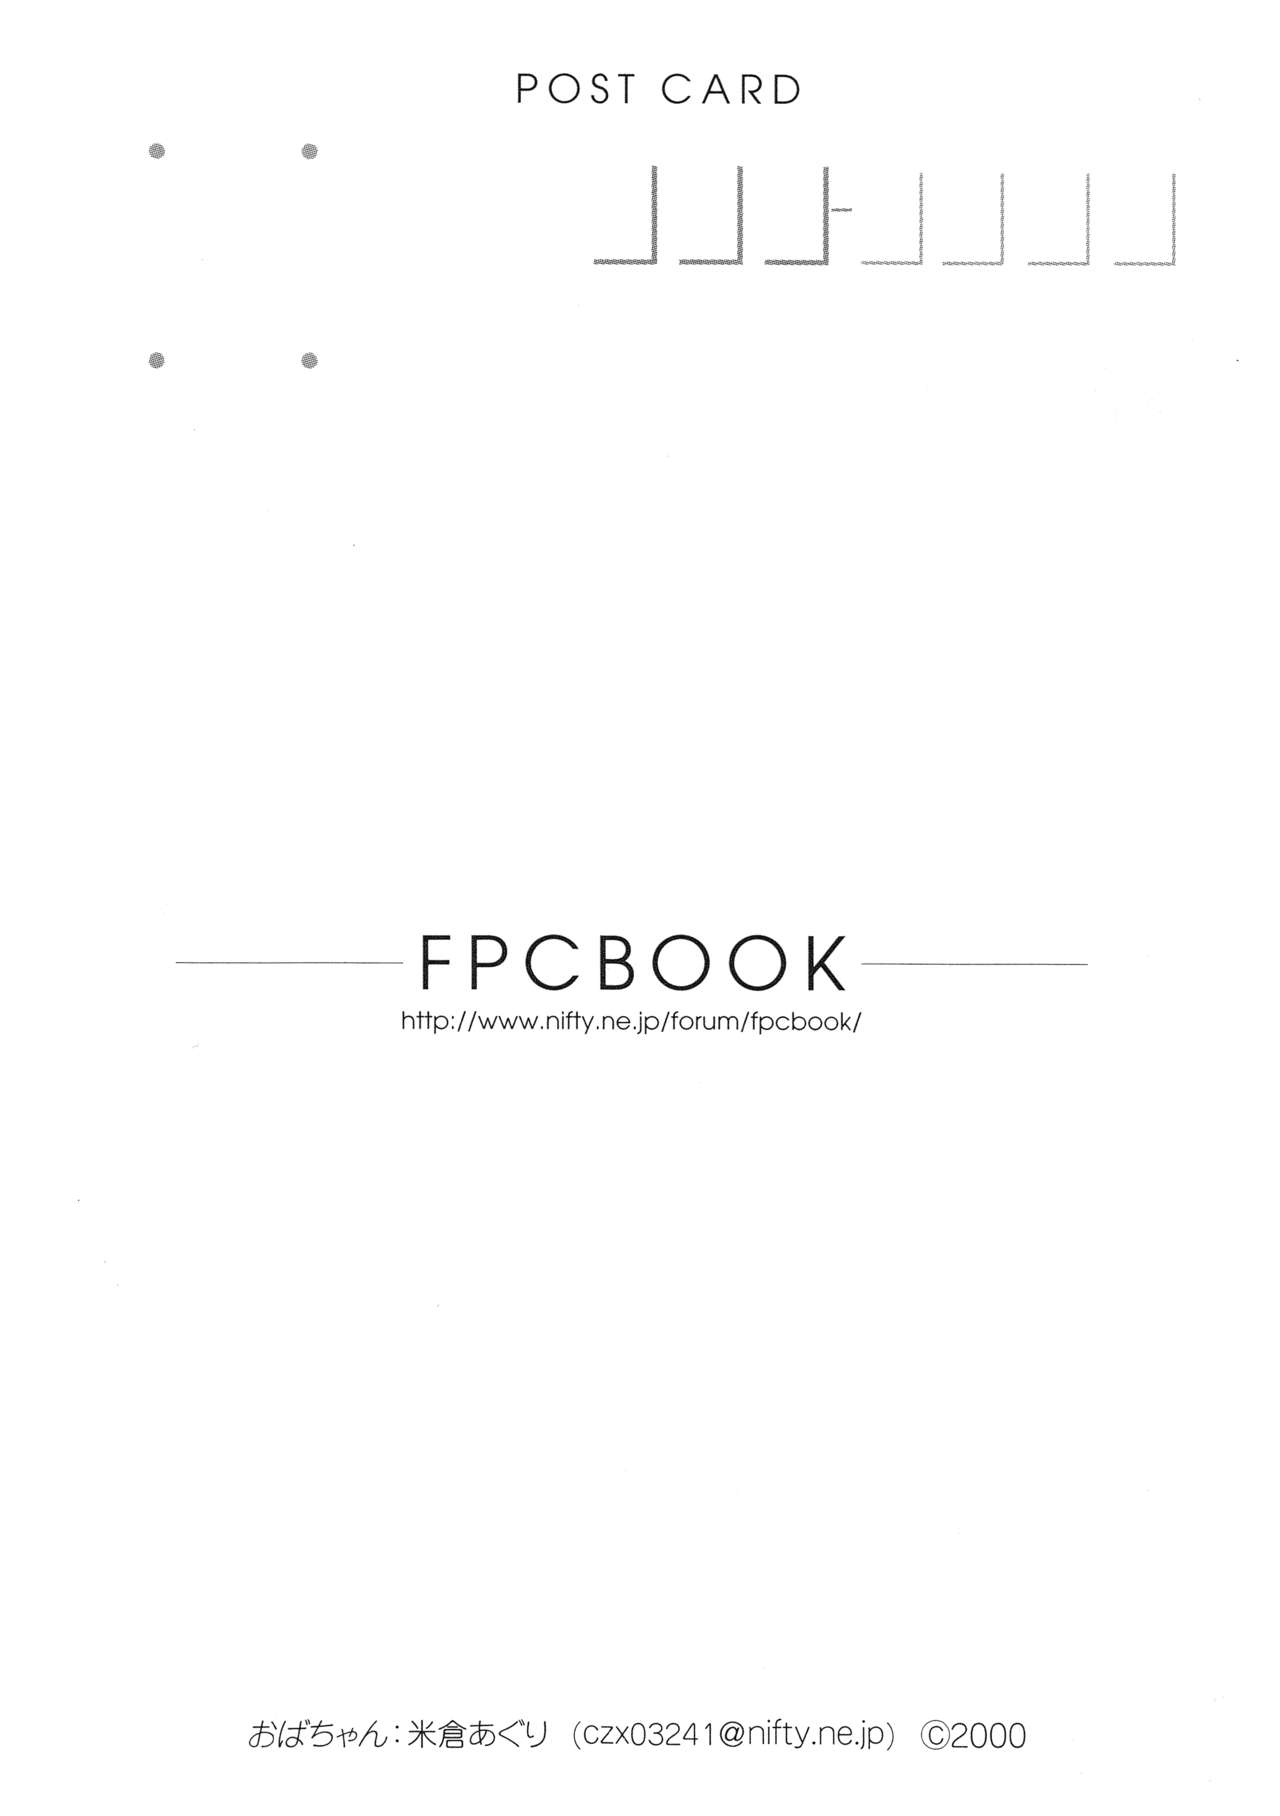 (C58) [Pasokon no Hon Forum] FPCBOOK POSTCARD BOOK 2000 27